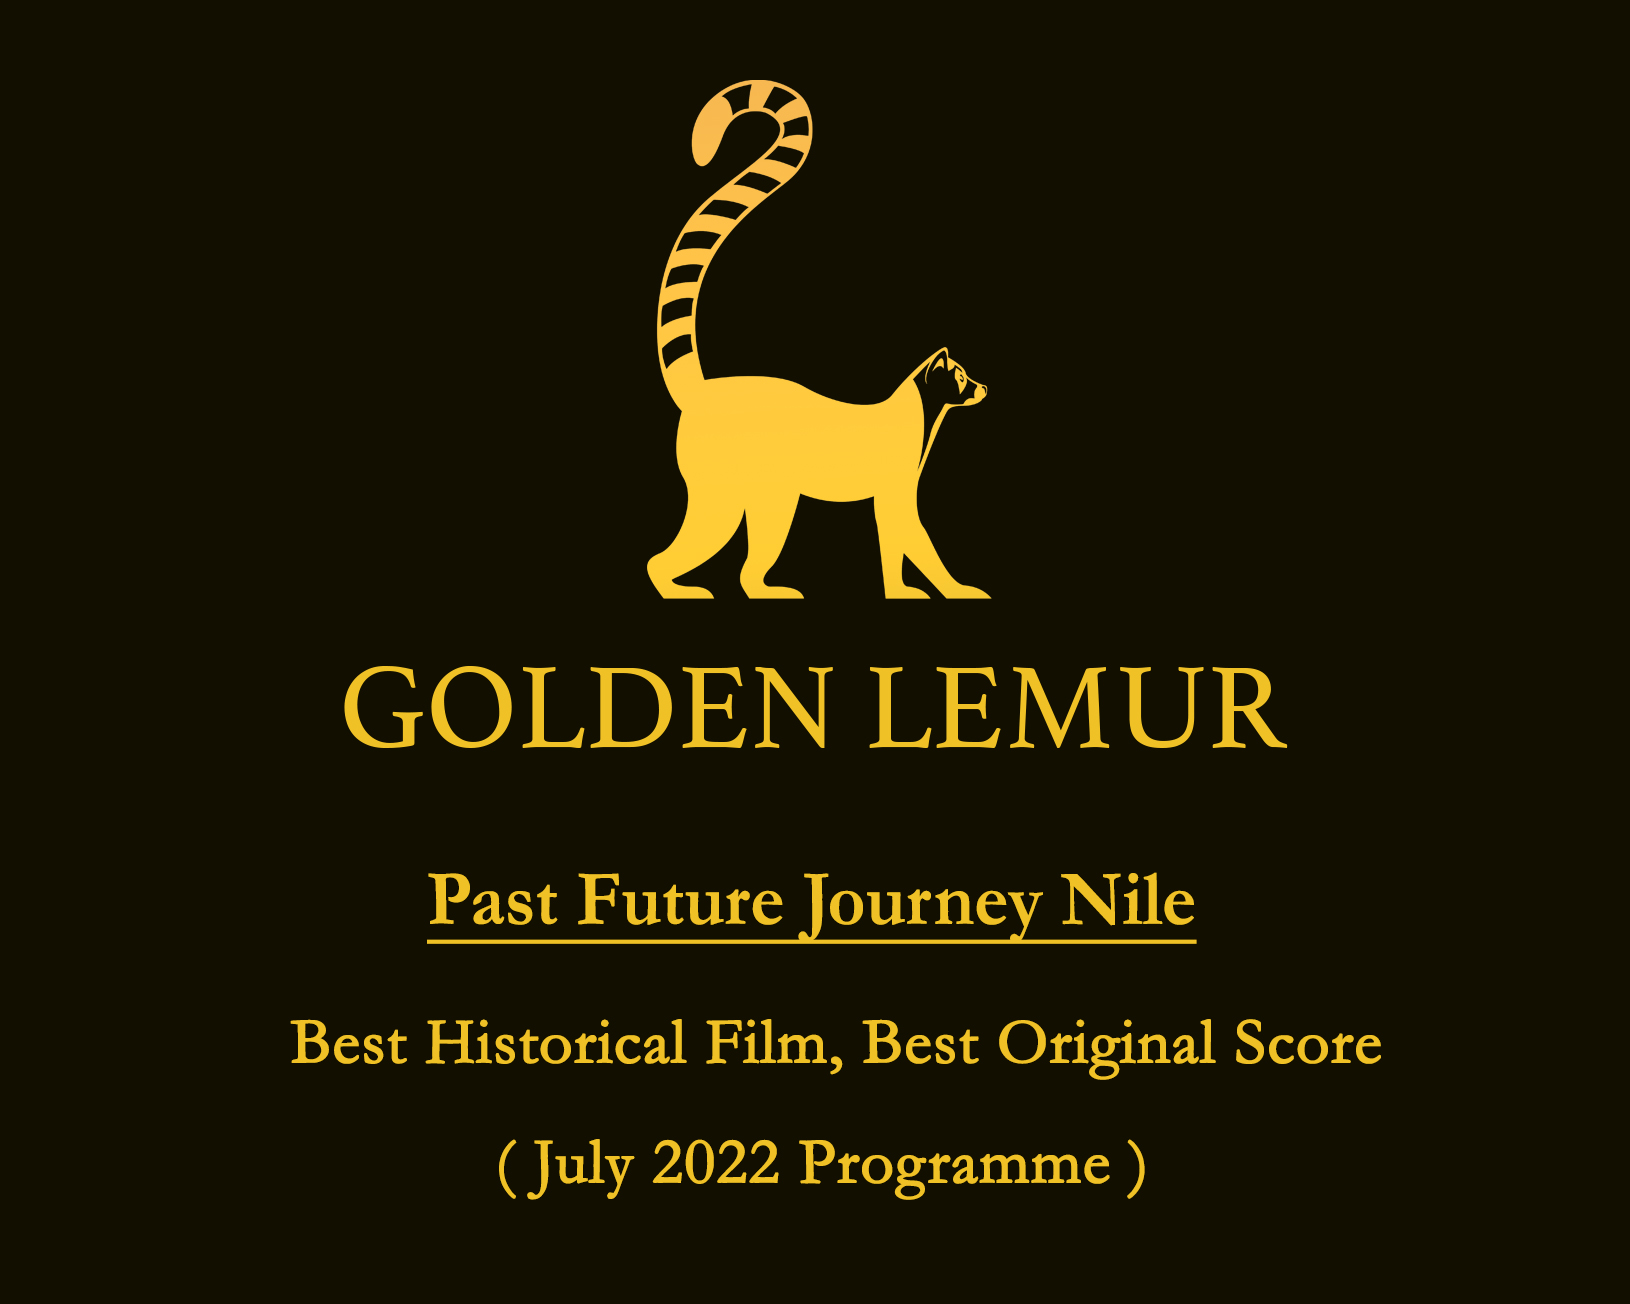 Golden Lemur Award